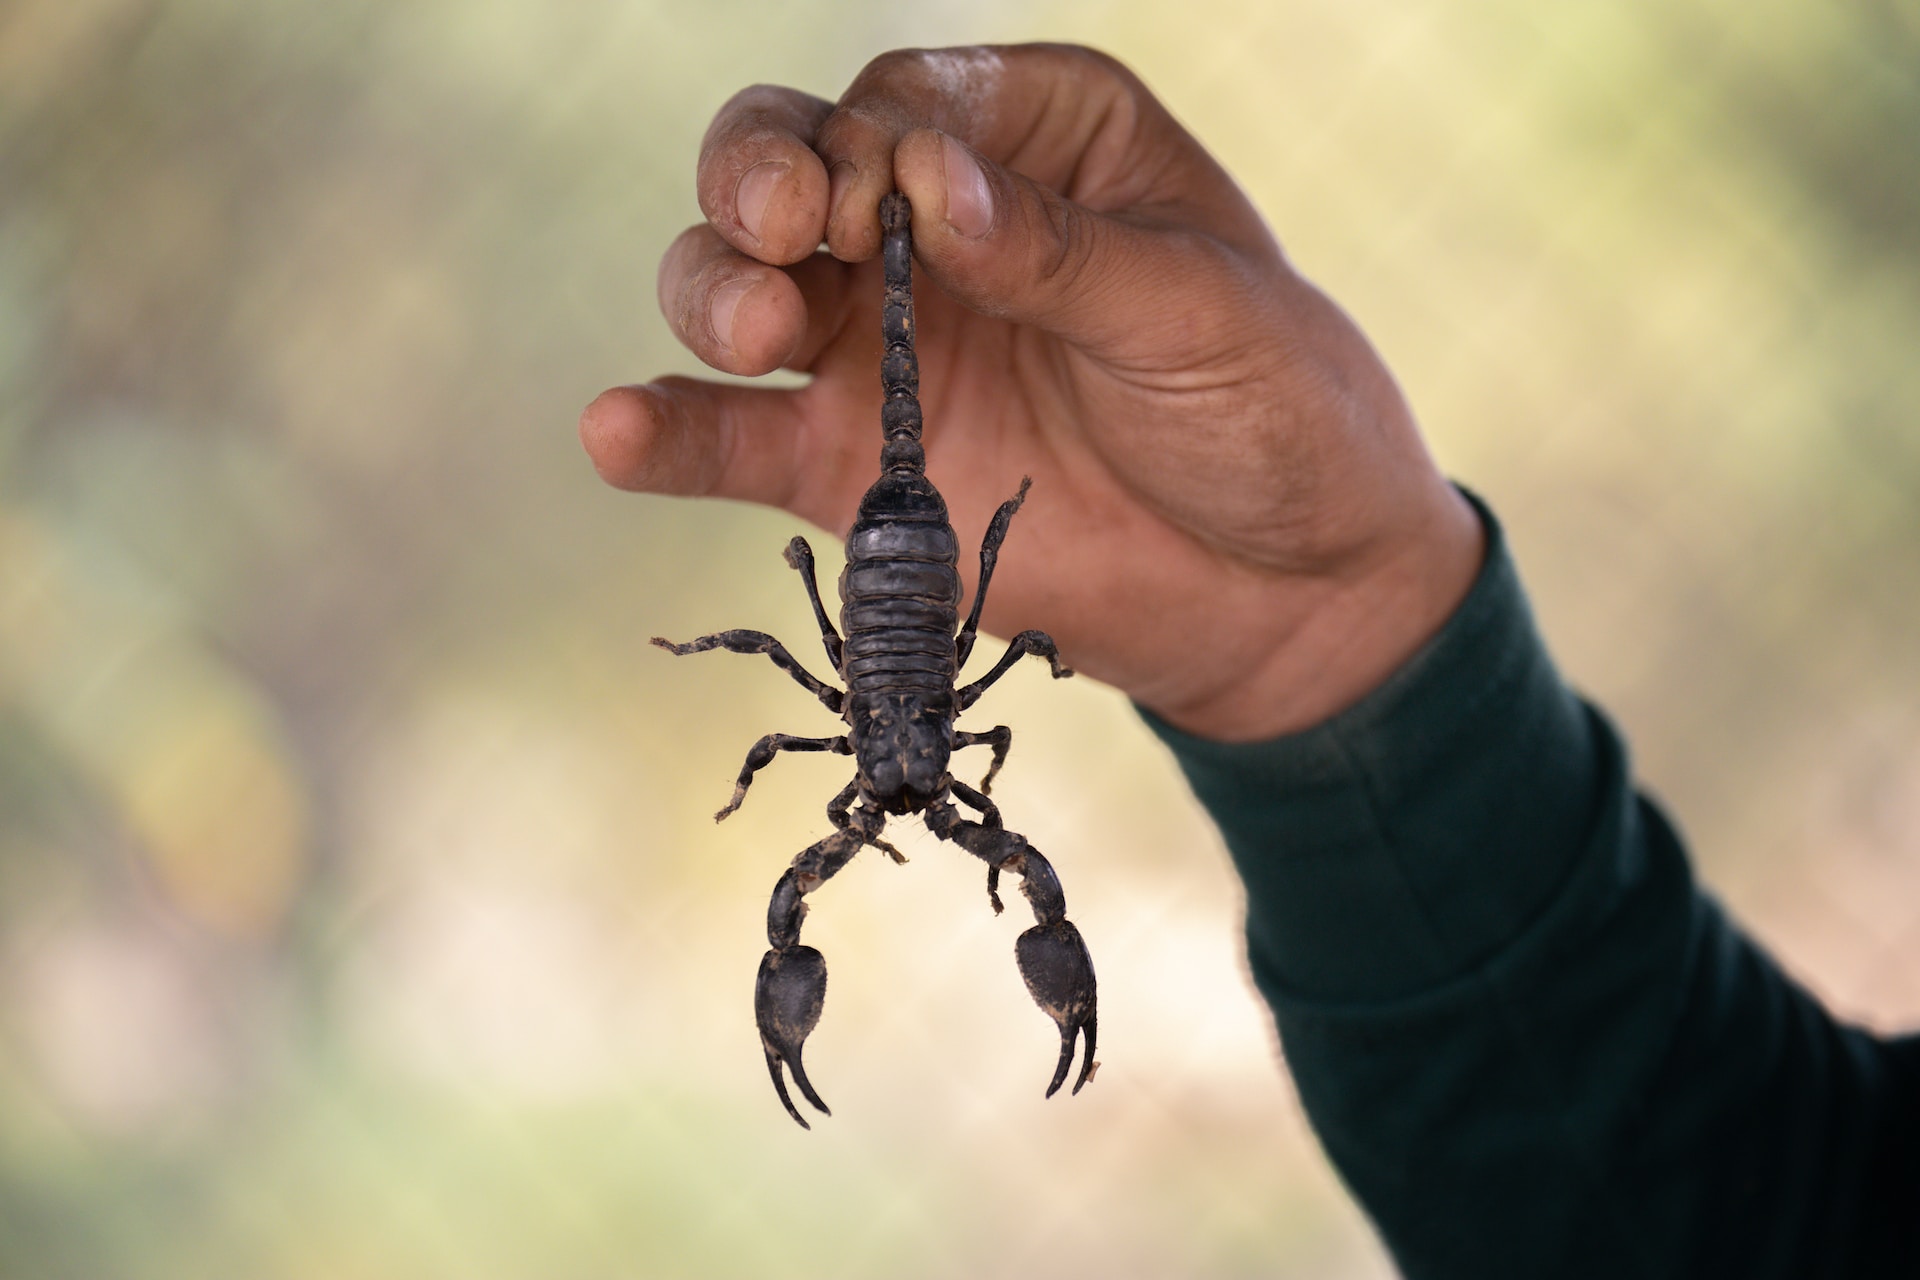 Man holding a scorpion